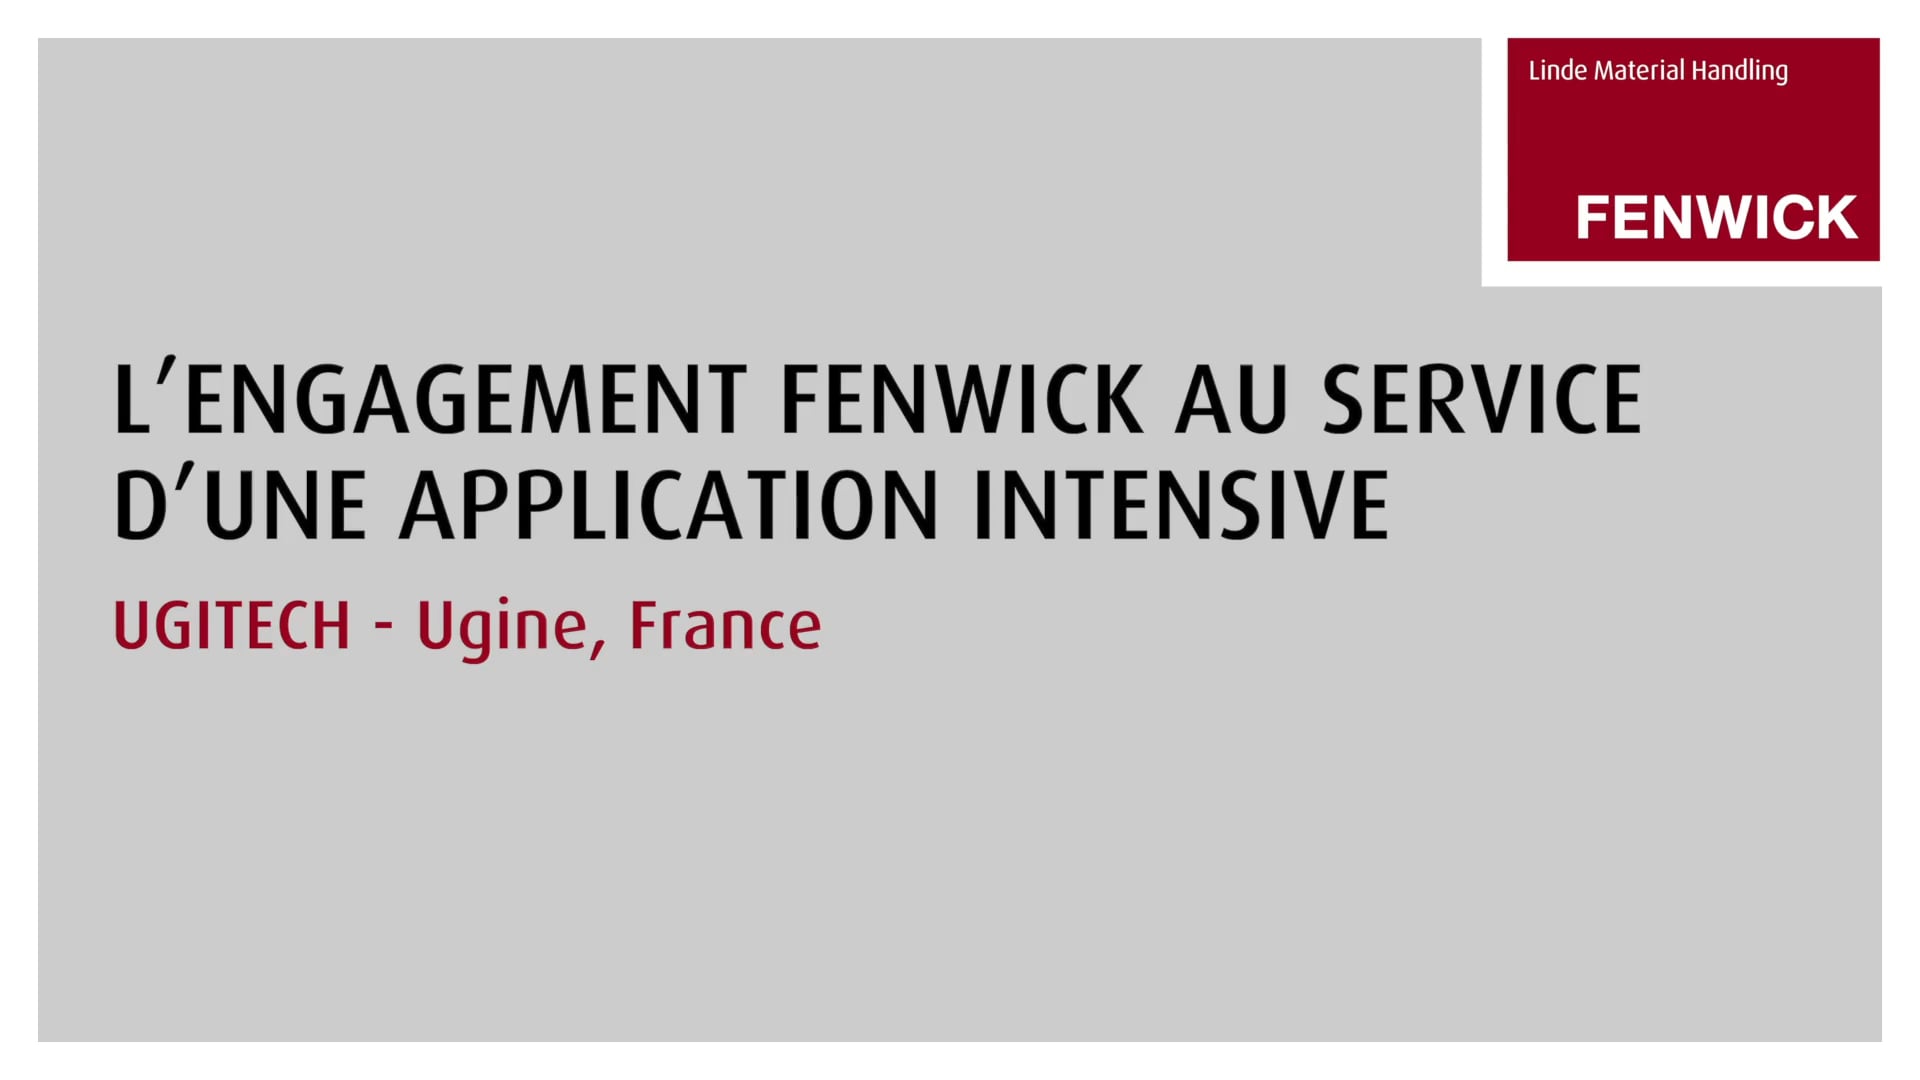 Fenwick - Ugitech - Le partenariat